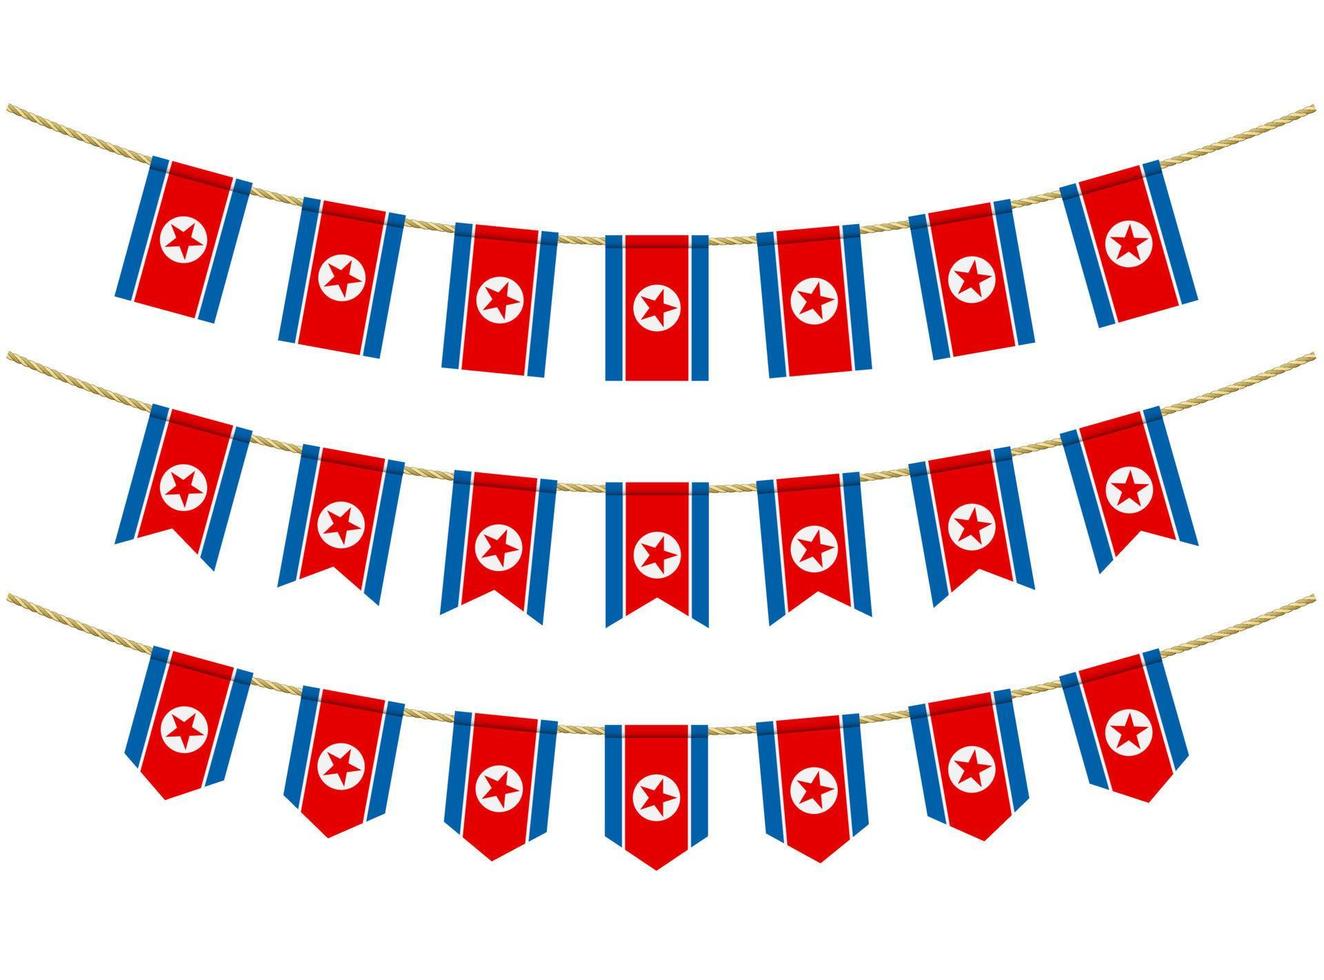 bandeira da coreia do norte nas cordas em fundo branco. conjunto de bandeiras de estamenha patriótica. decoração de estamenha da bandeira da coreia do norte vetor